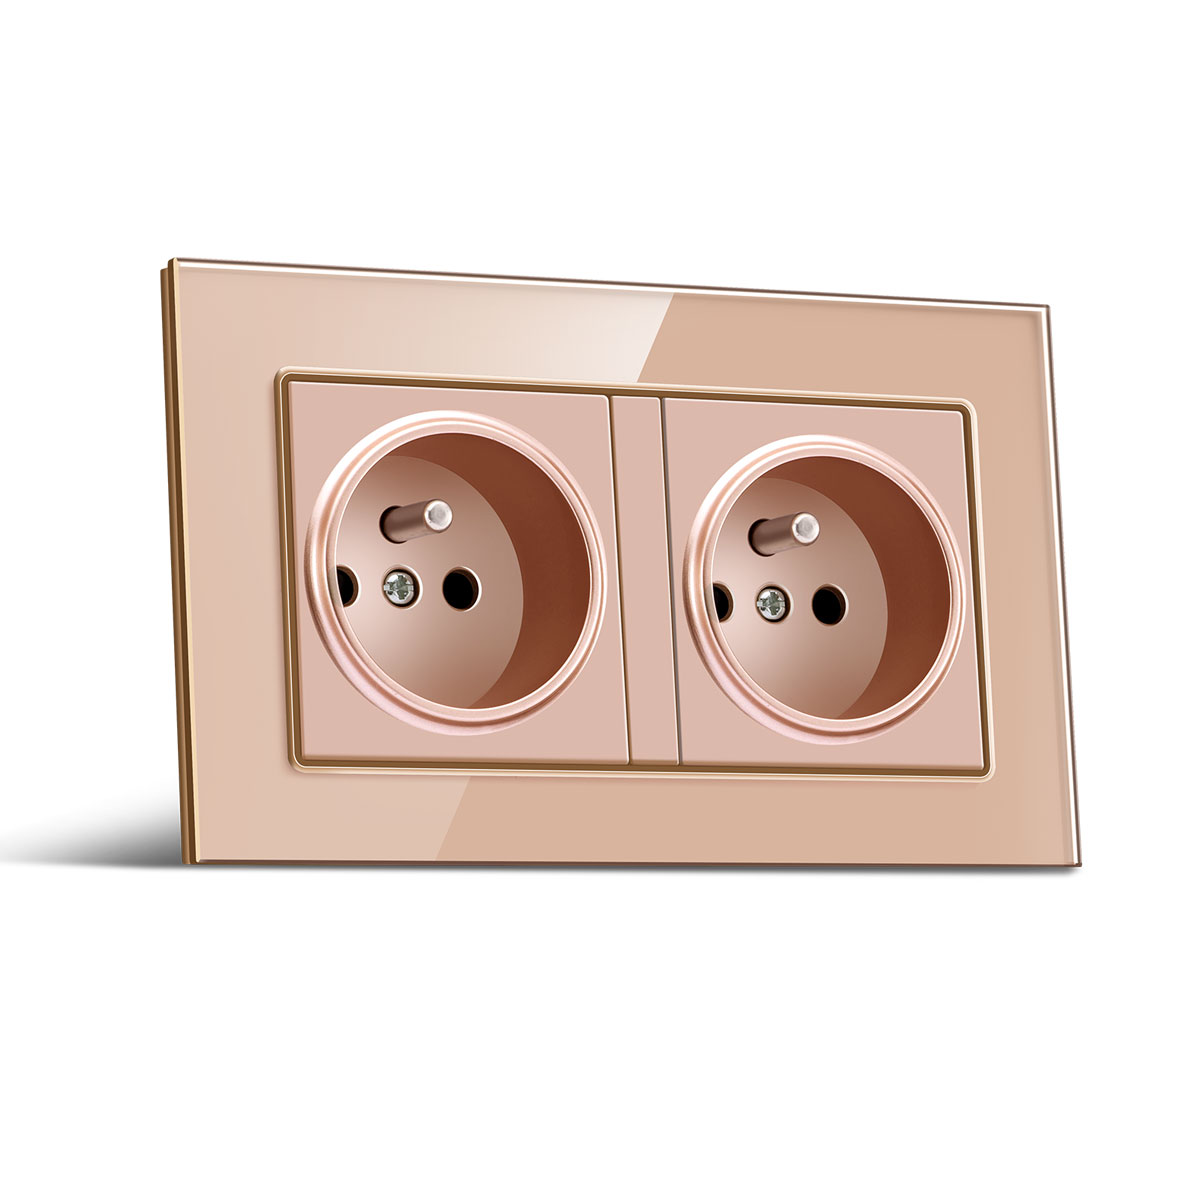 BONDA-Socket-Switch-8686-PC-Glass-Panel-Eu-German-France-Plug-Wall-Socket-Smart-Home-Series-Switch-1736000-7